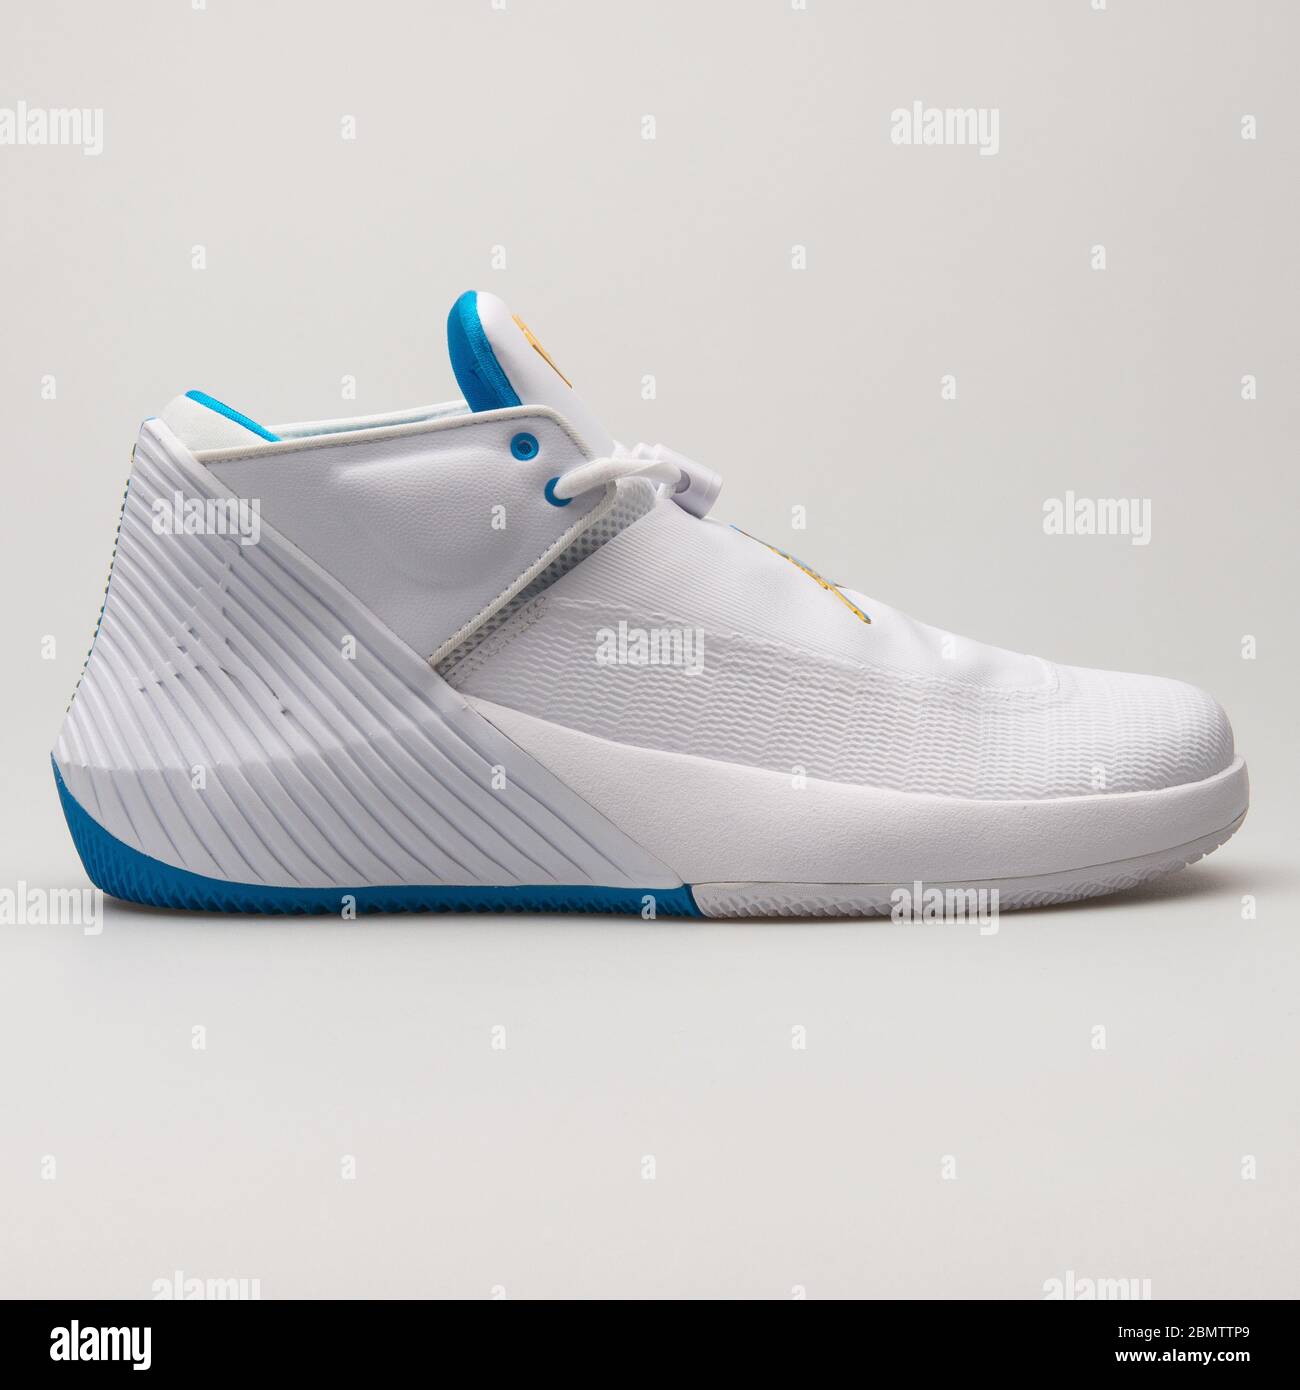 VIENNA, AUSTRIA - JUNE 14, 2018: Nike Jordan Why Not Zero 1 Low white and  blue sneaker on white background Stock Photo - Alamy